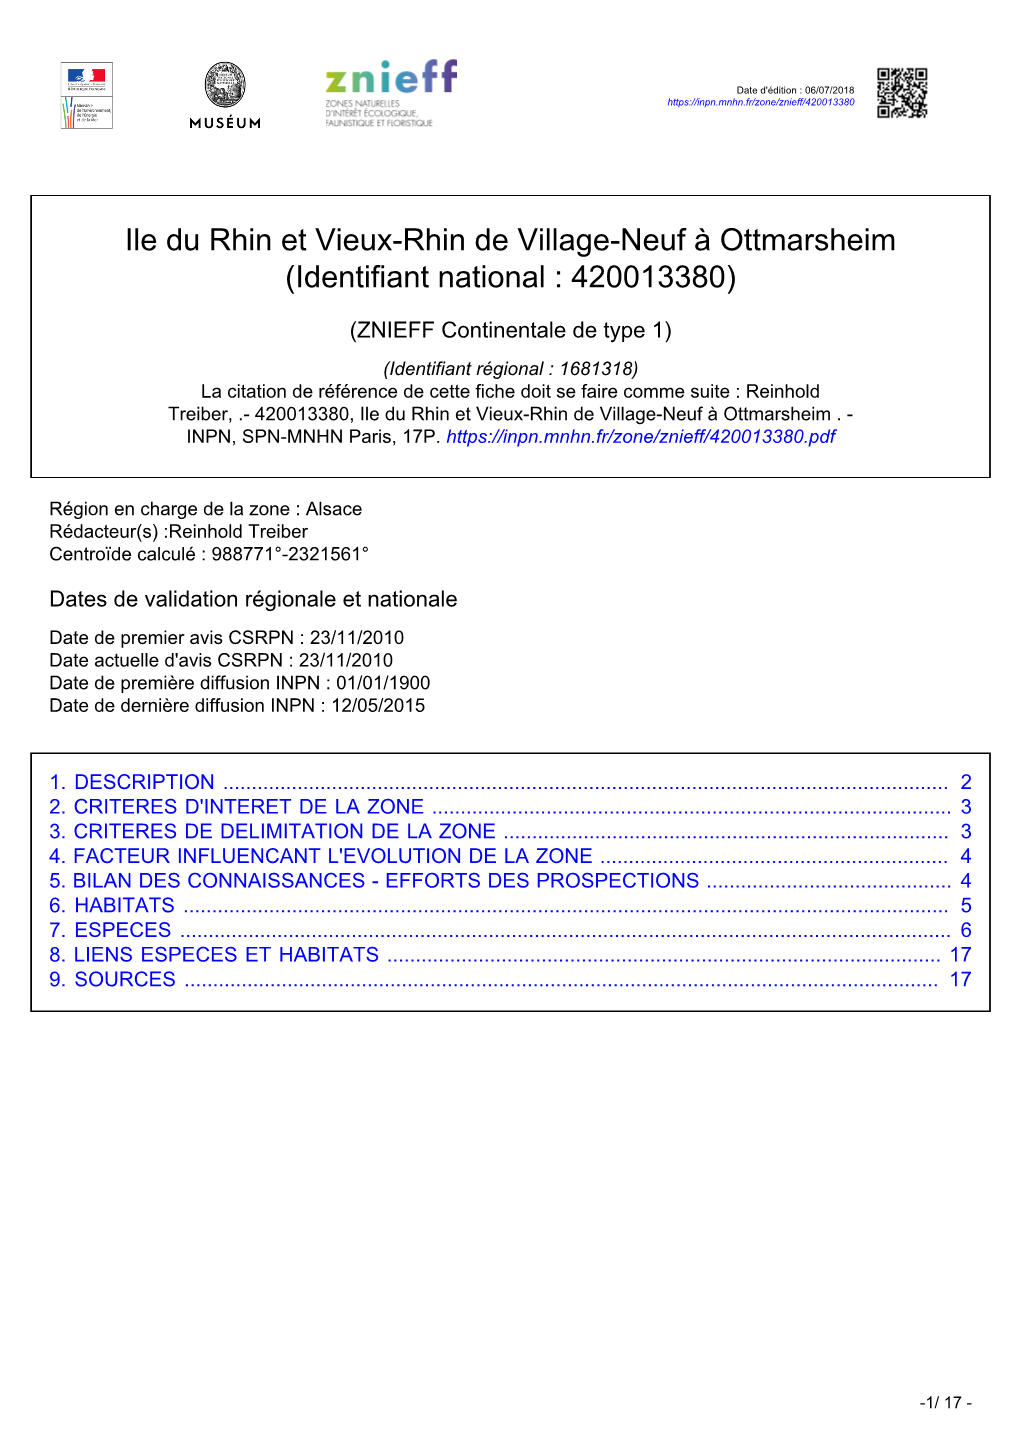 Ile Du Rhin Et Vieux-Rhin De Village-Neuf À Ottmarsheim (Identifiant National : 420013380)